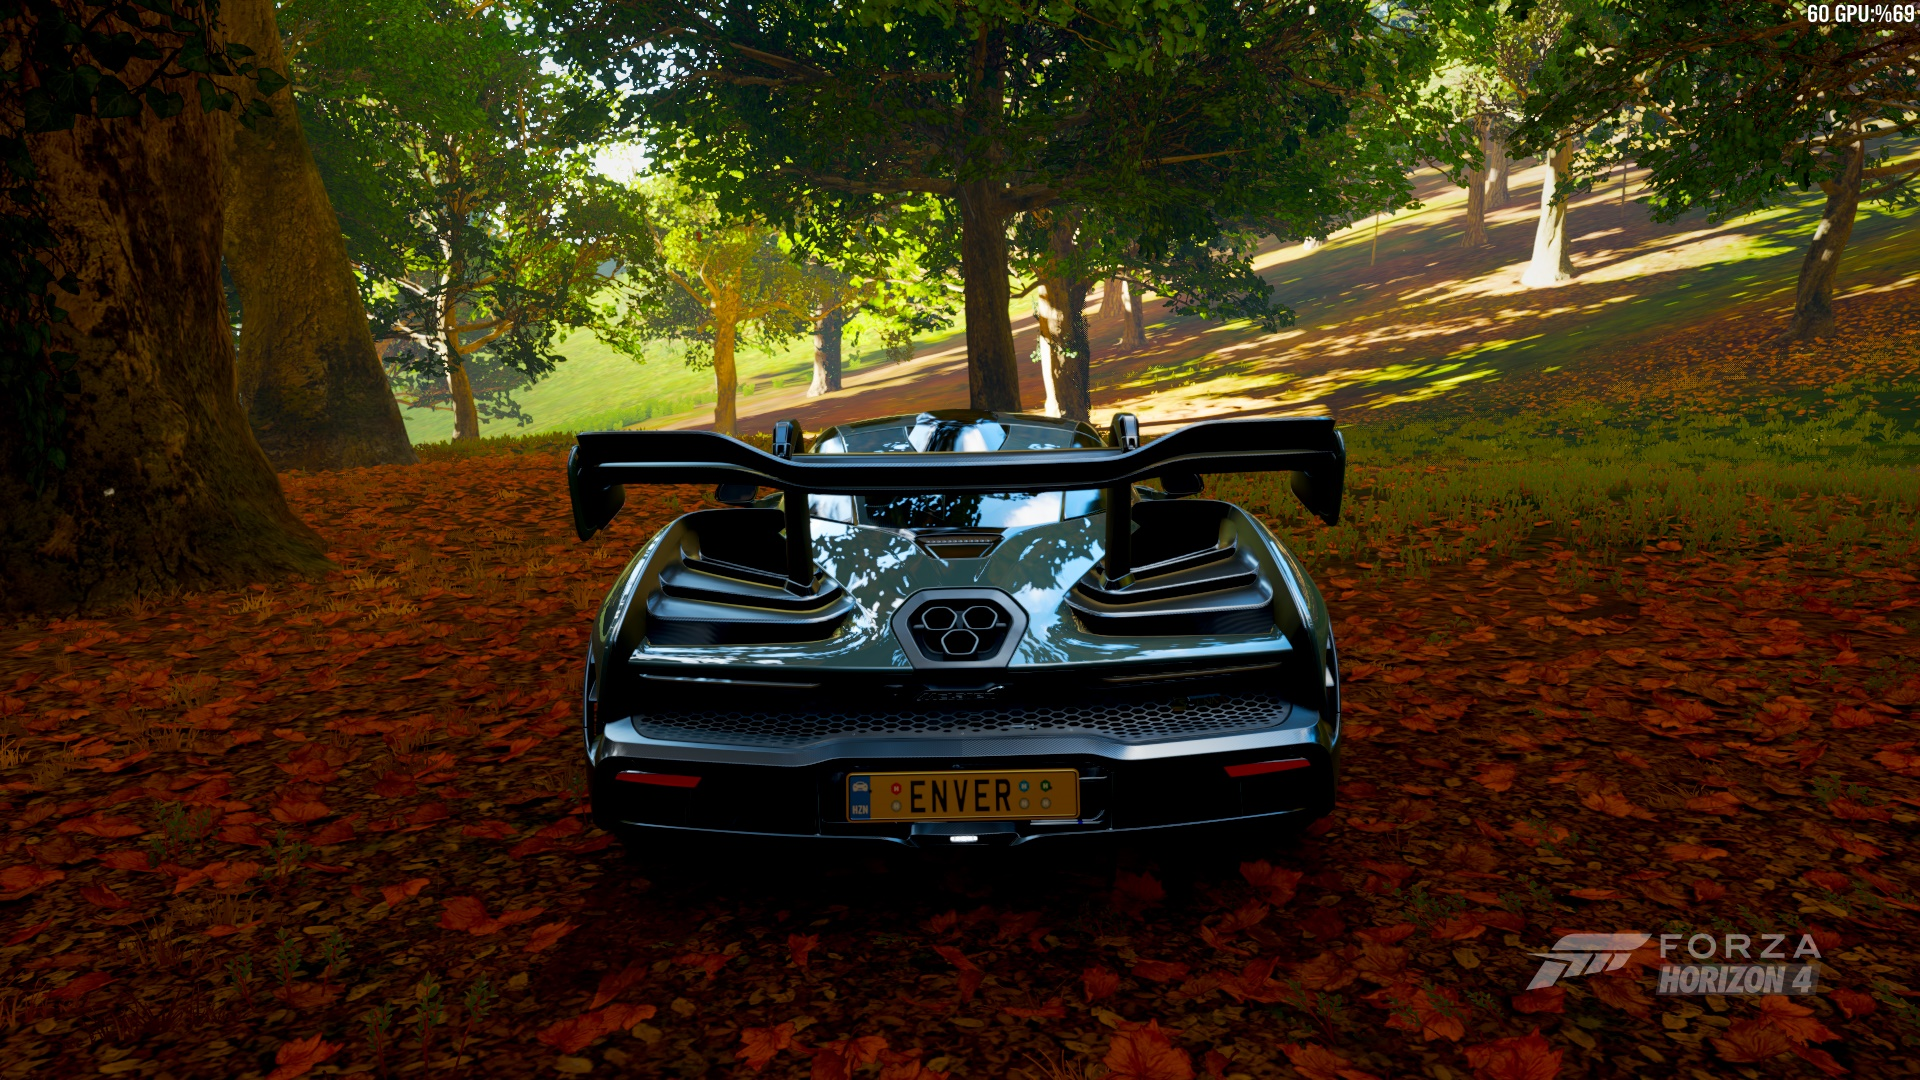 Форза Хоризон 5. Forza Horizon 4 Preview. Forza Horizon 4 Toyota Land Cruiser 200. Forza Horizon 4 обложка. Horizon 4 pc